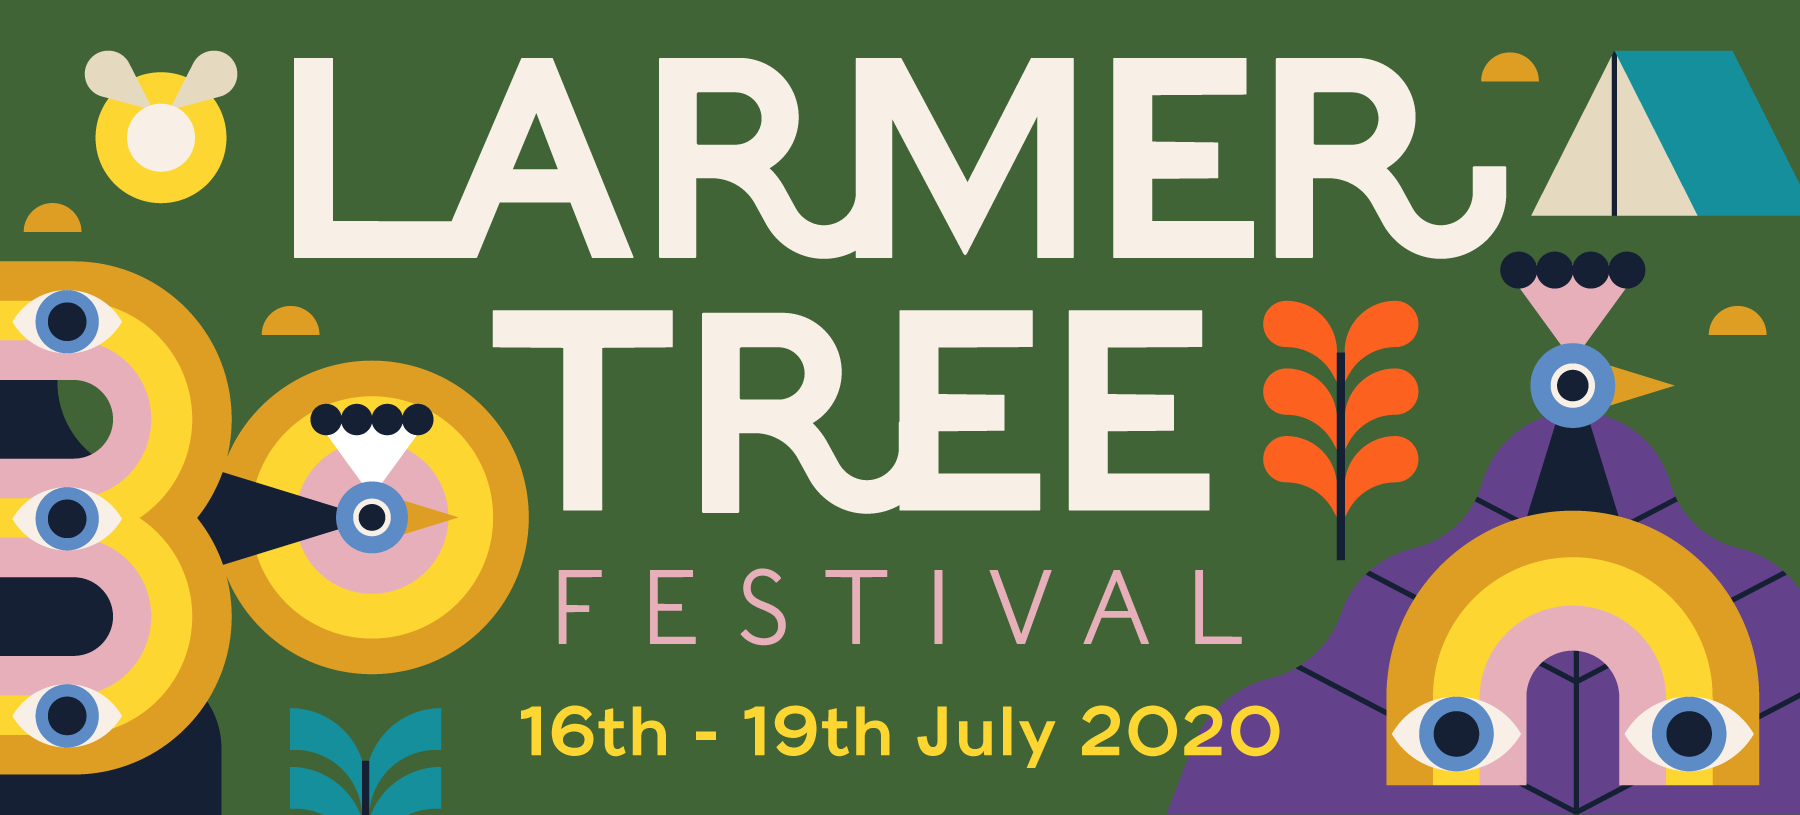 Larmer Tree Festival - 16th - 19th July 2020